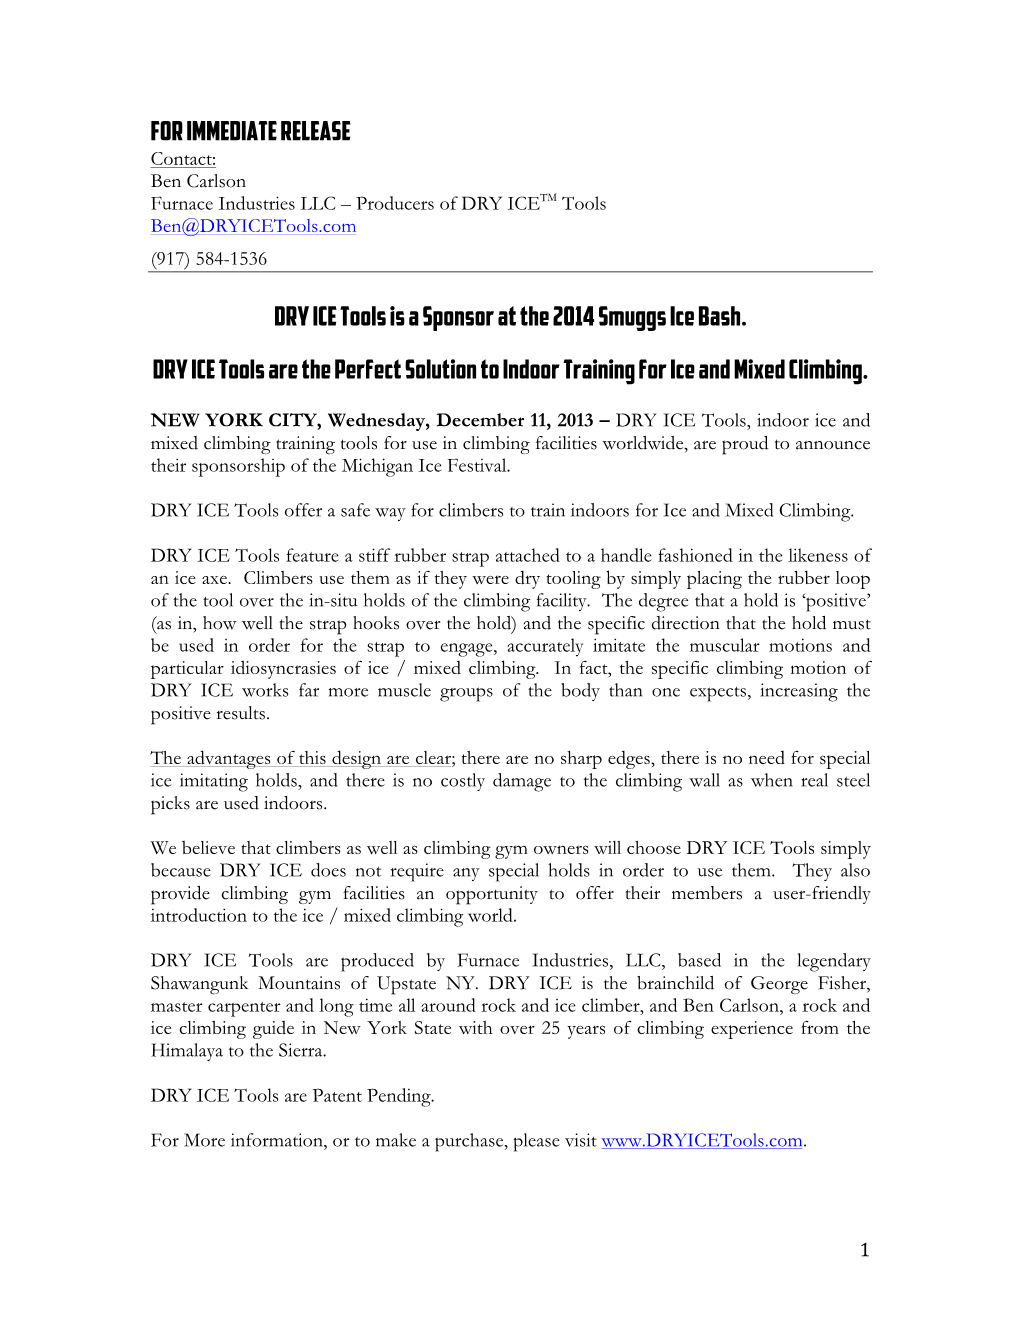 DRY ICE SIB Press Release